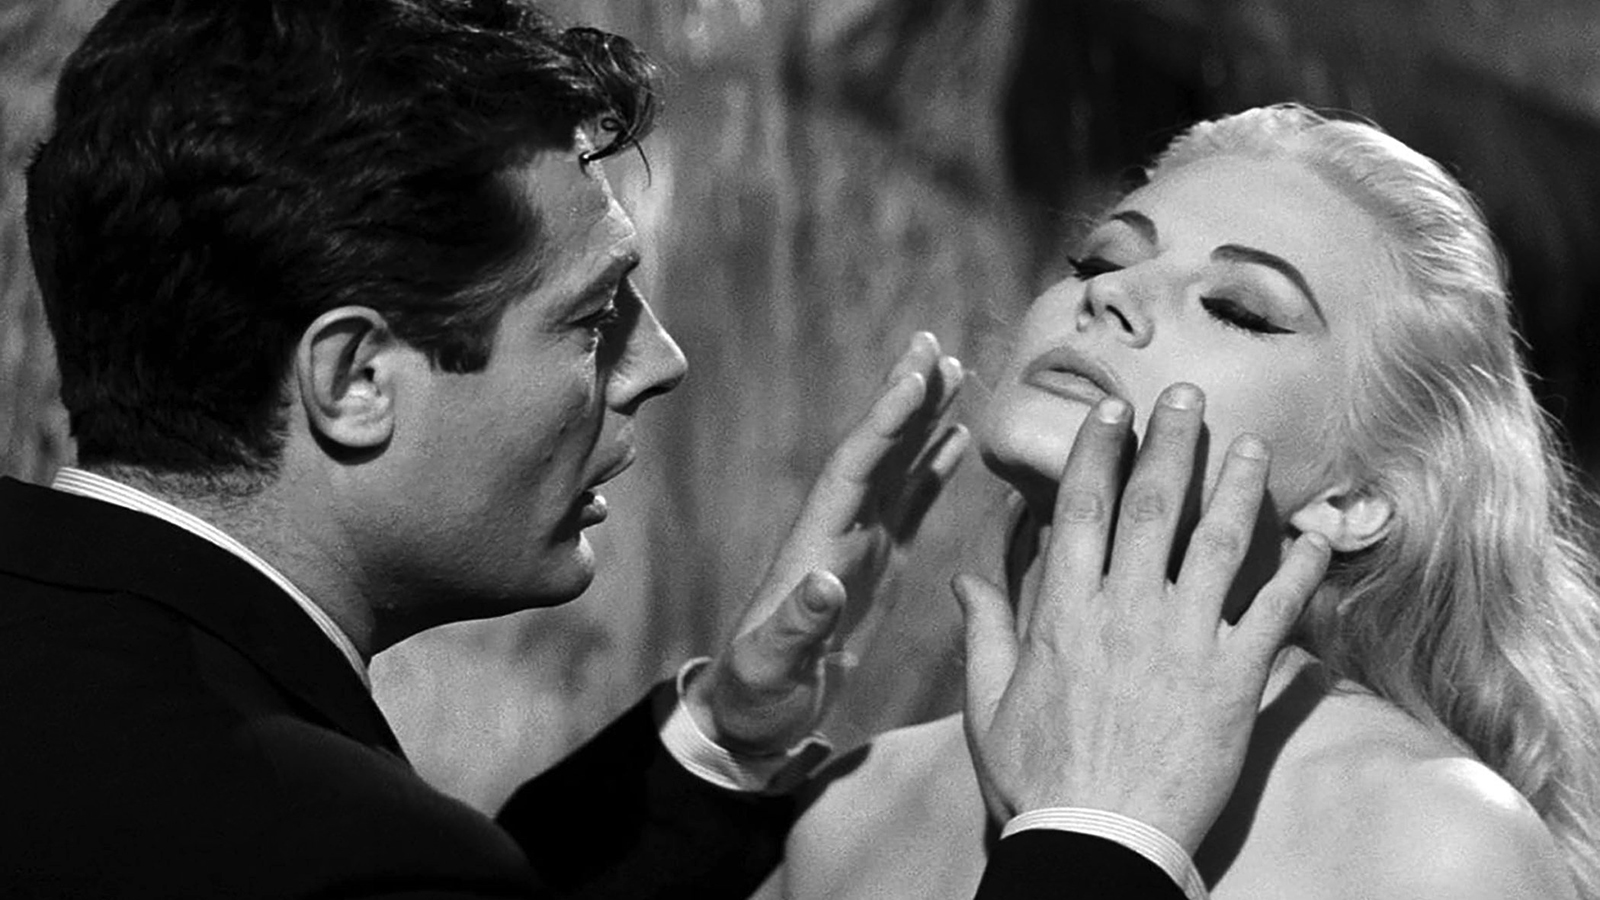 The Cinema of Federico Fellini